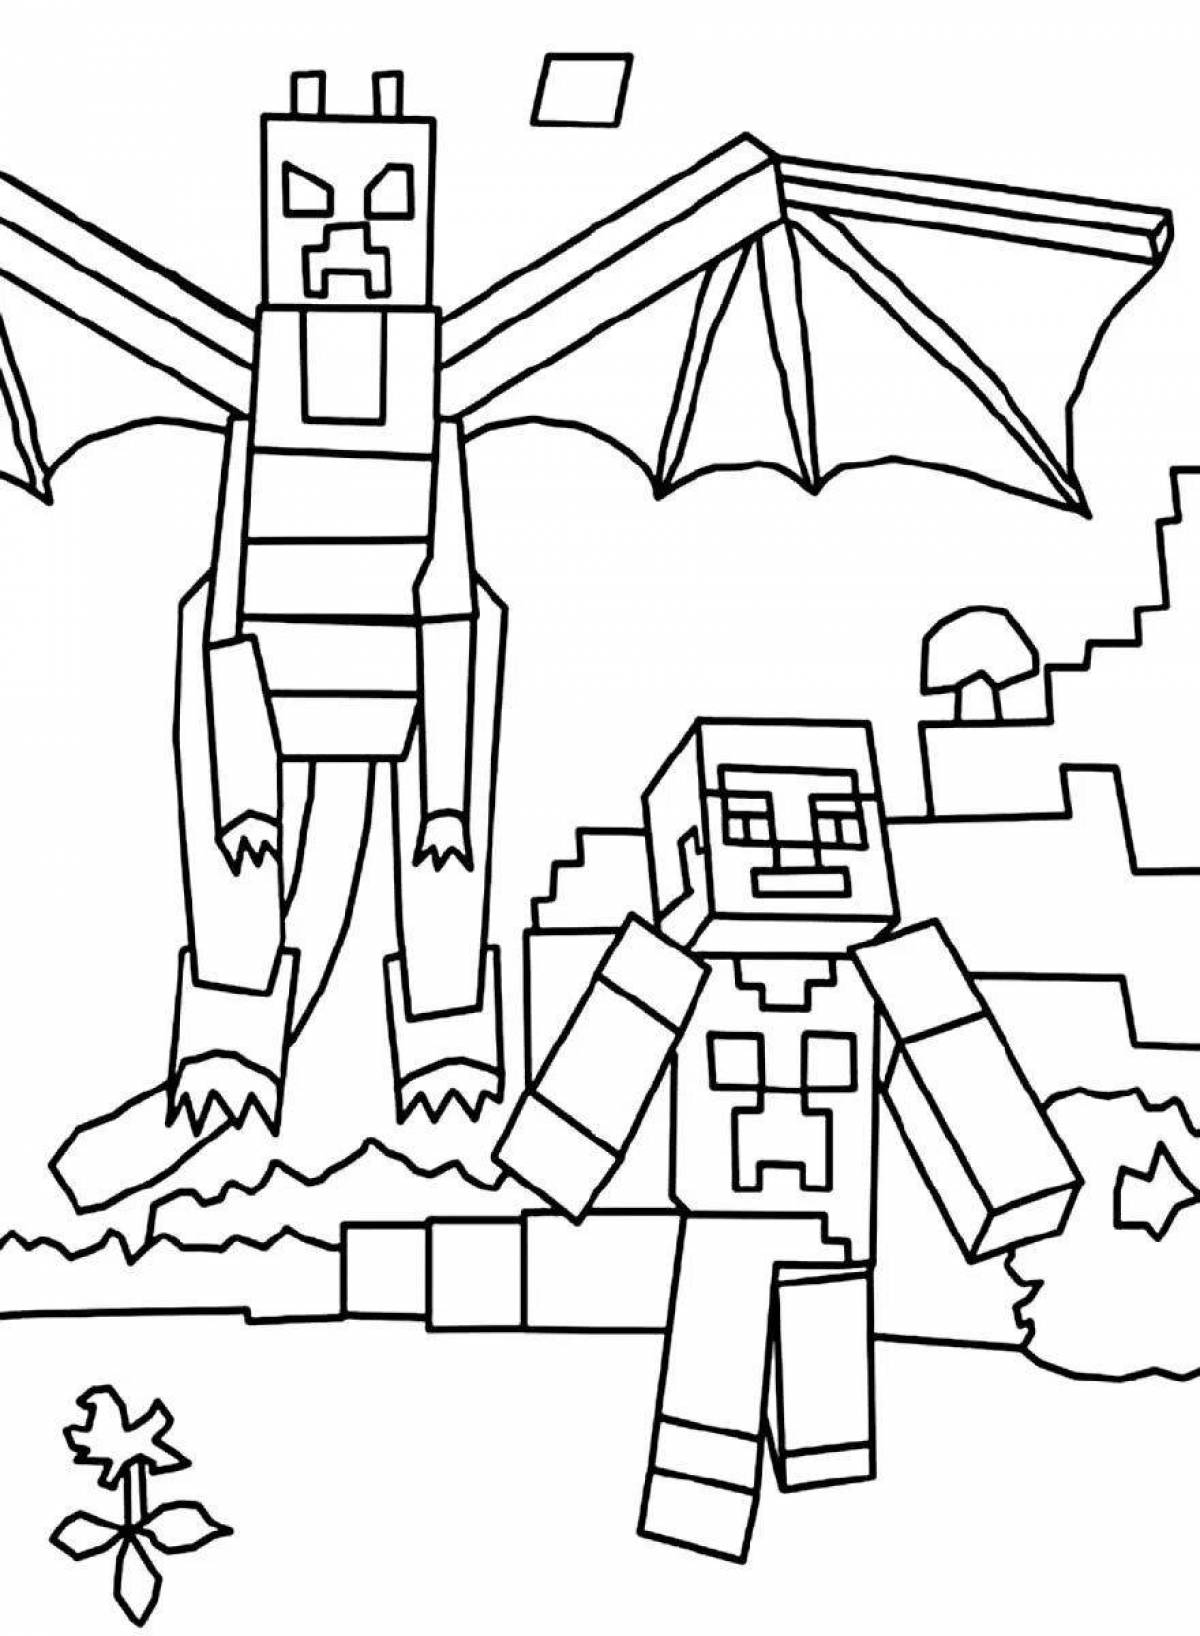 Adorable minecraft ender dragon coloring page